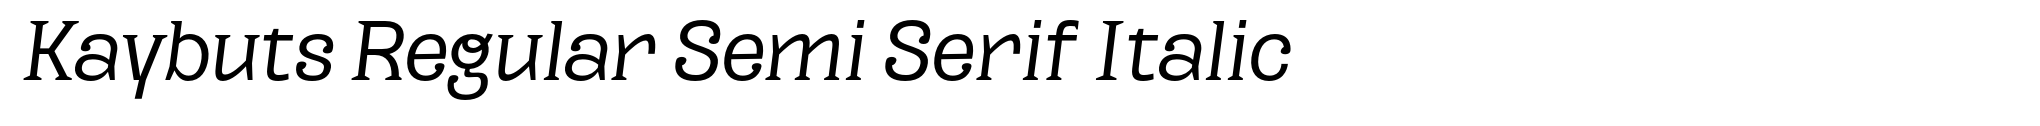 Kaybuts Regular Semi Serif Italic image